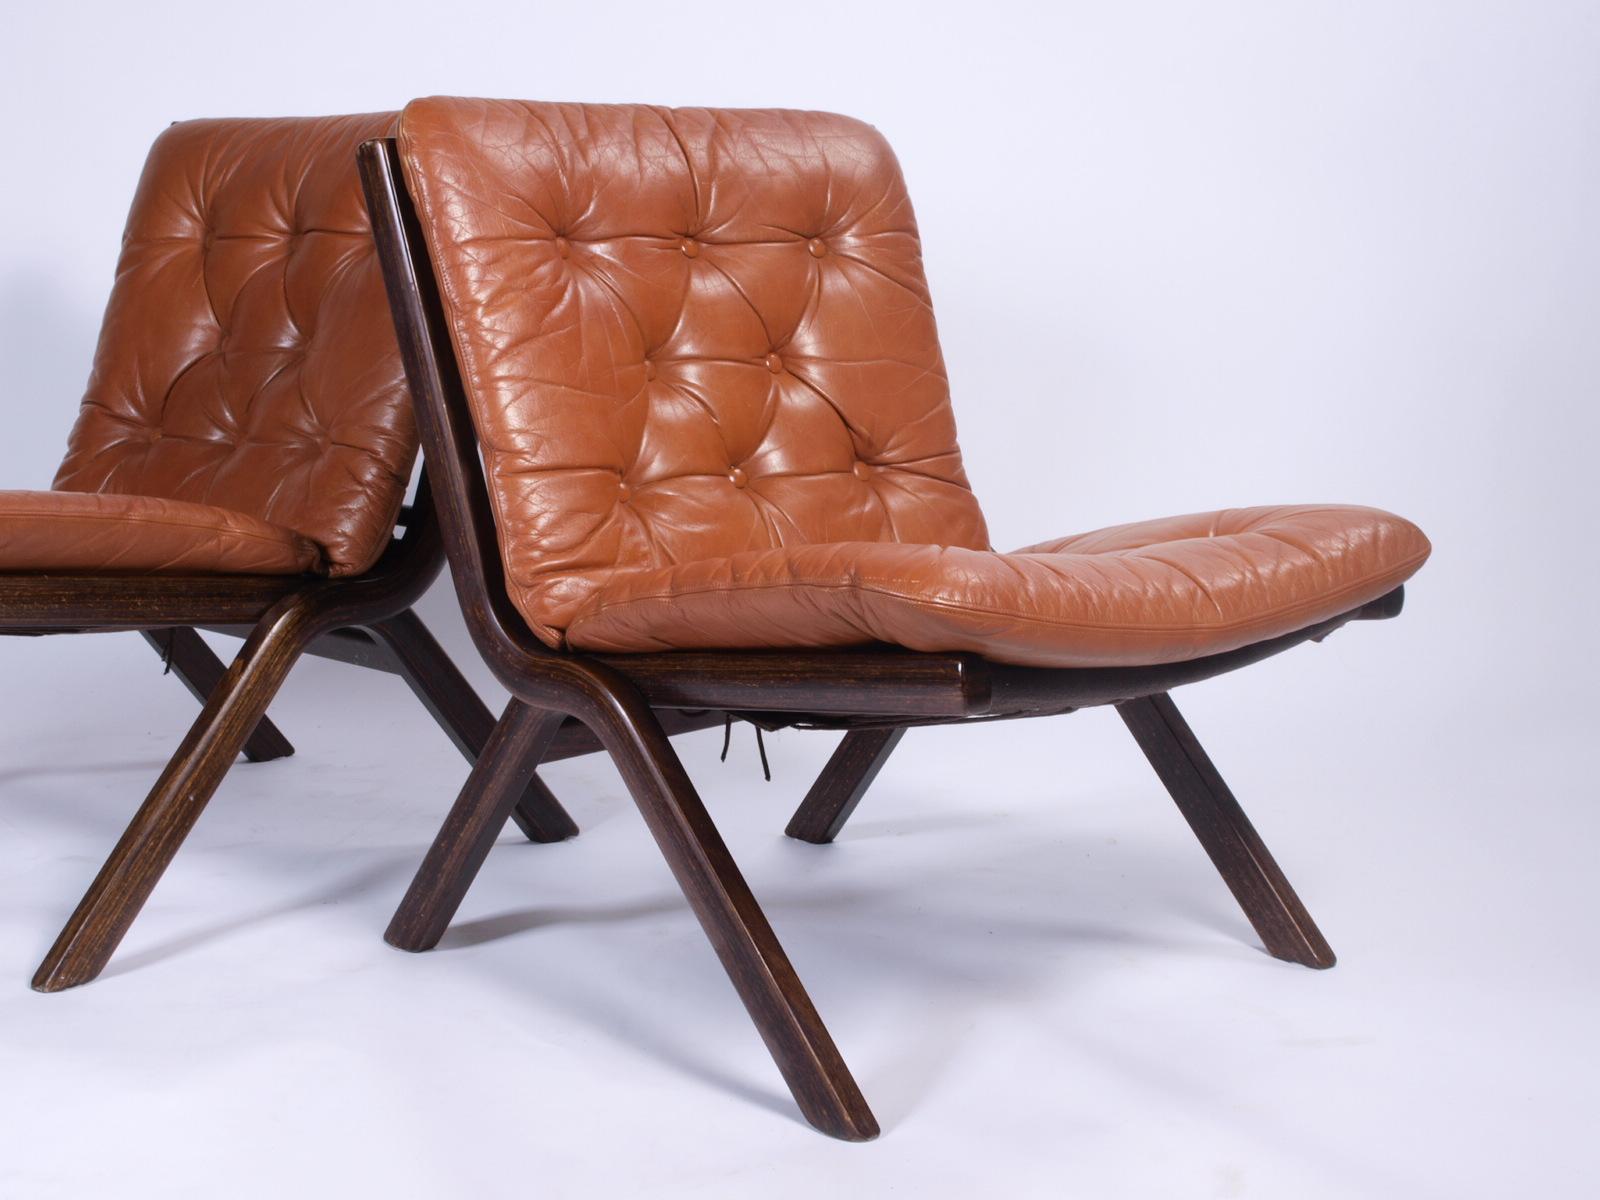 Scandinavian Modern Uno Folding Chair by Ekornes of Norway 1970's, set of 2